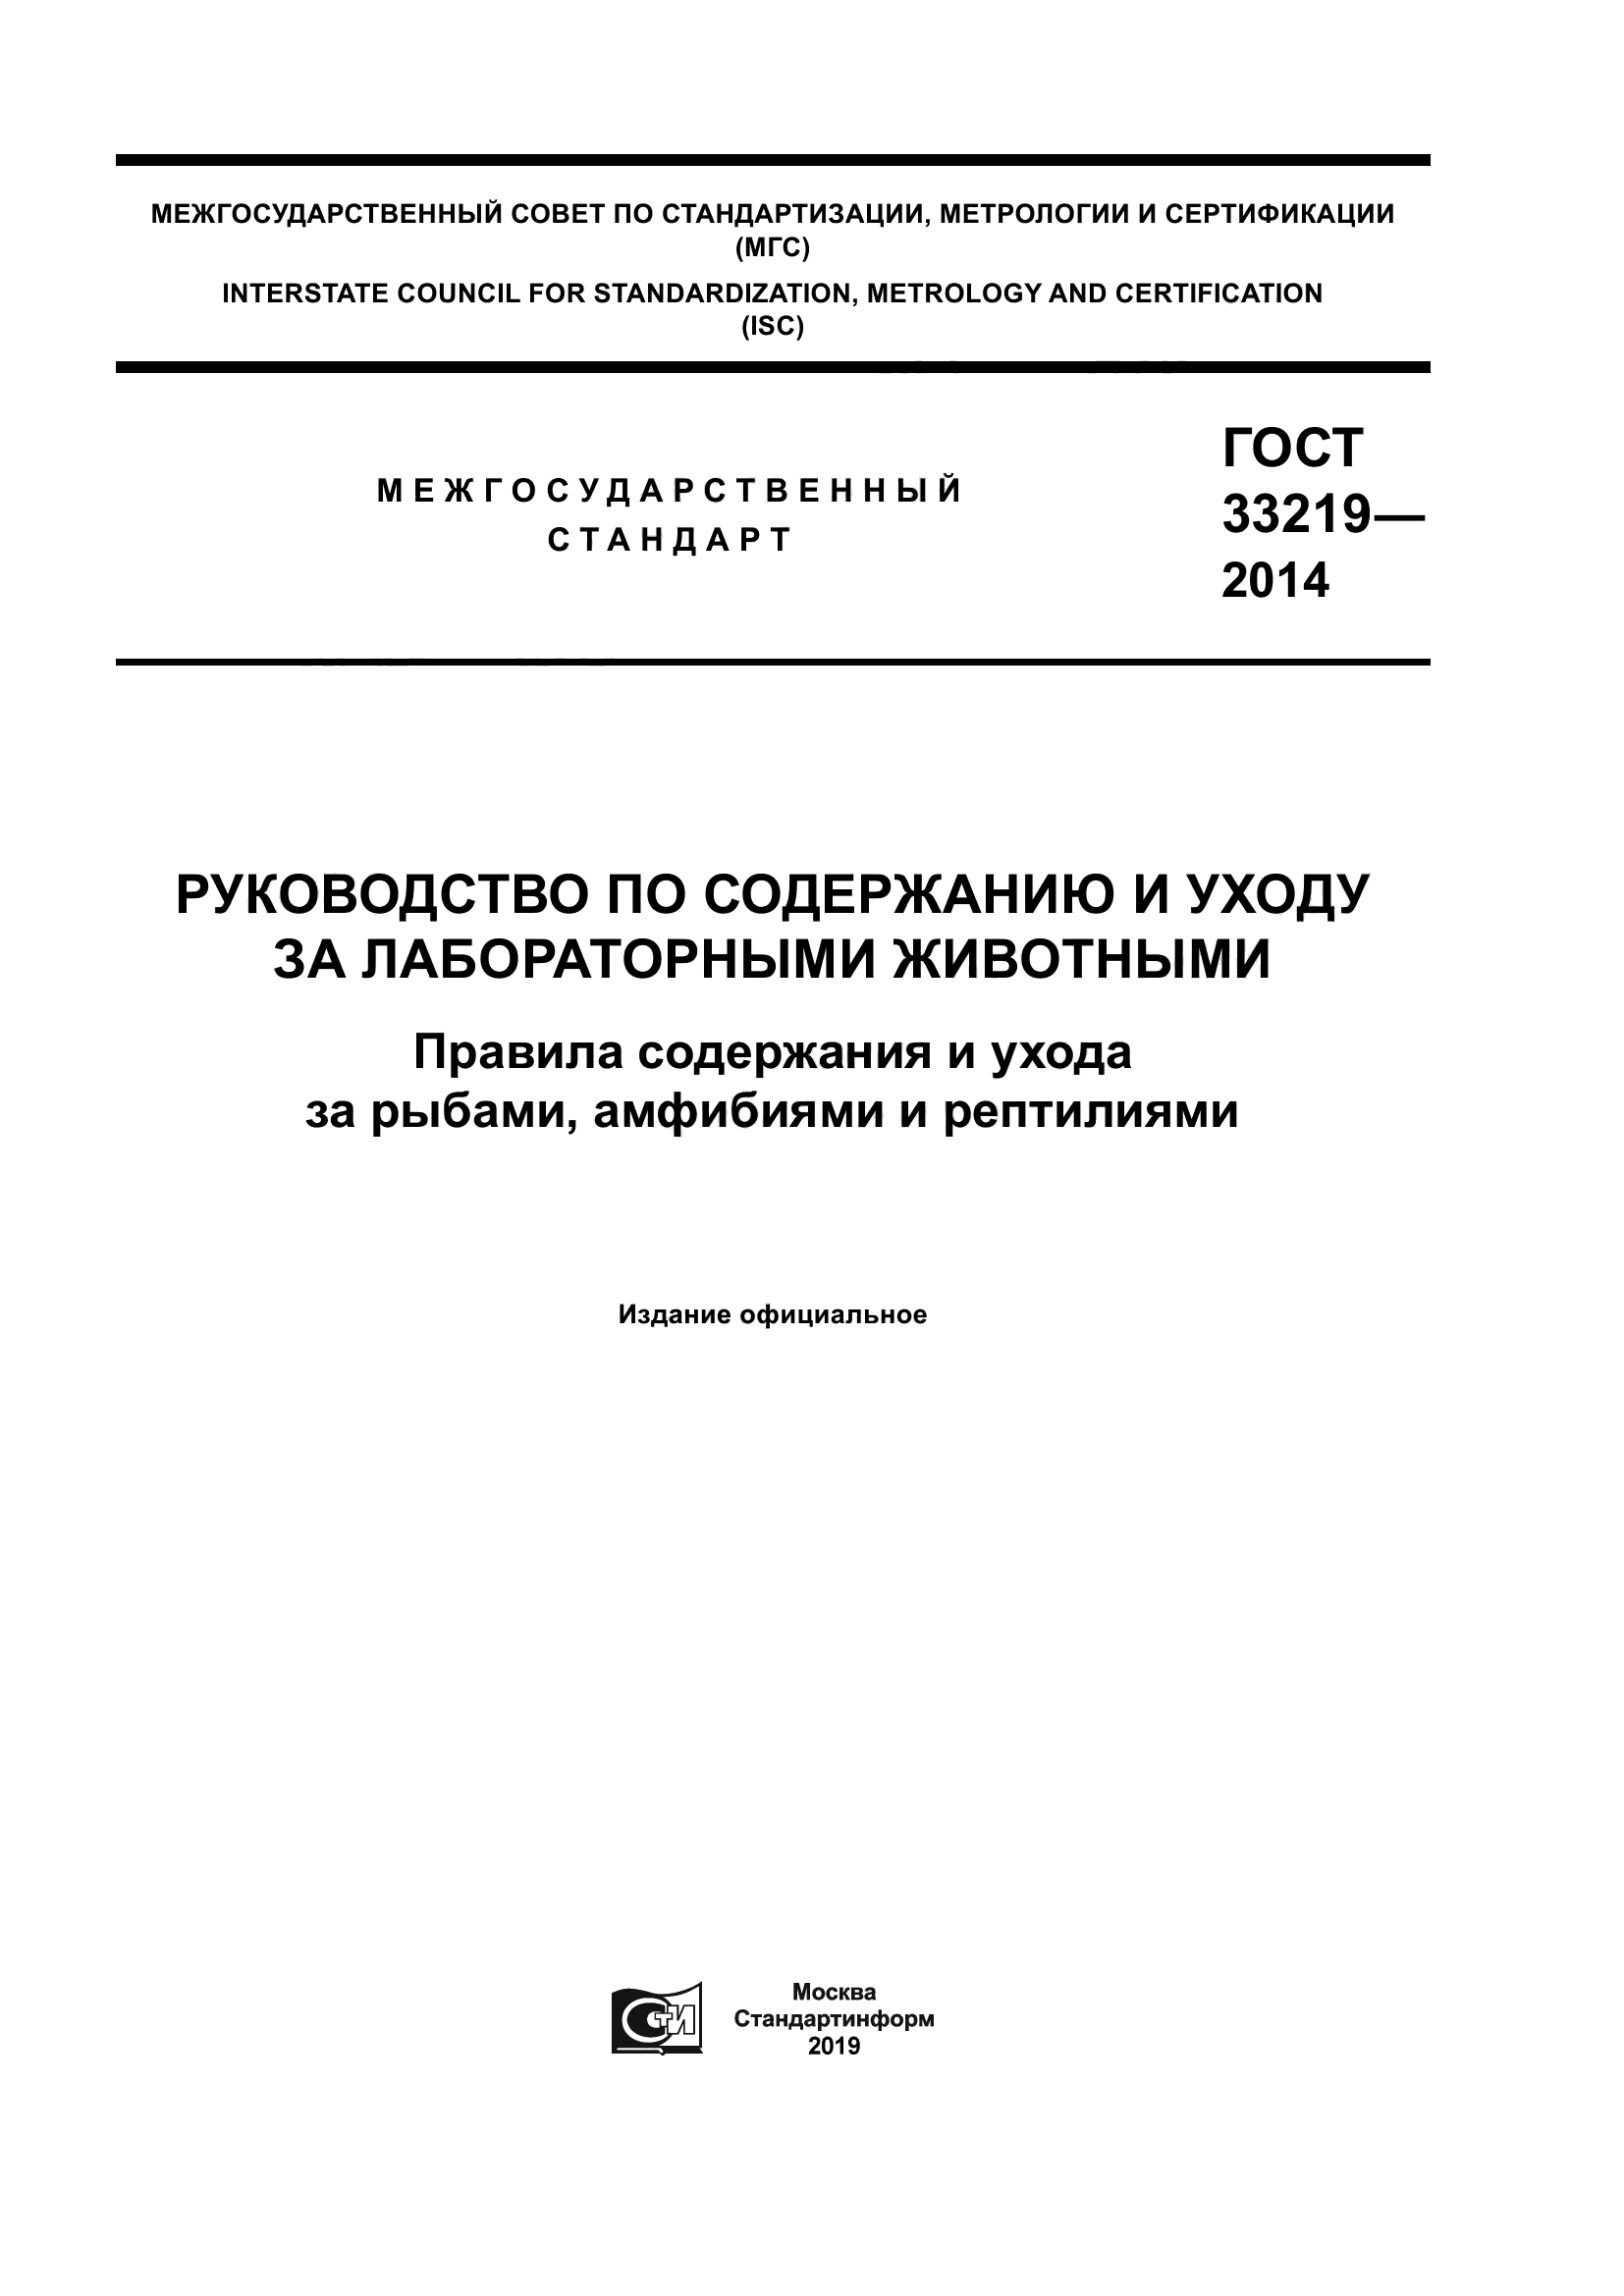 ГОСТ 33219-2014